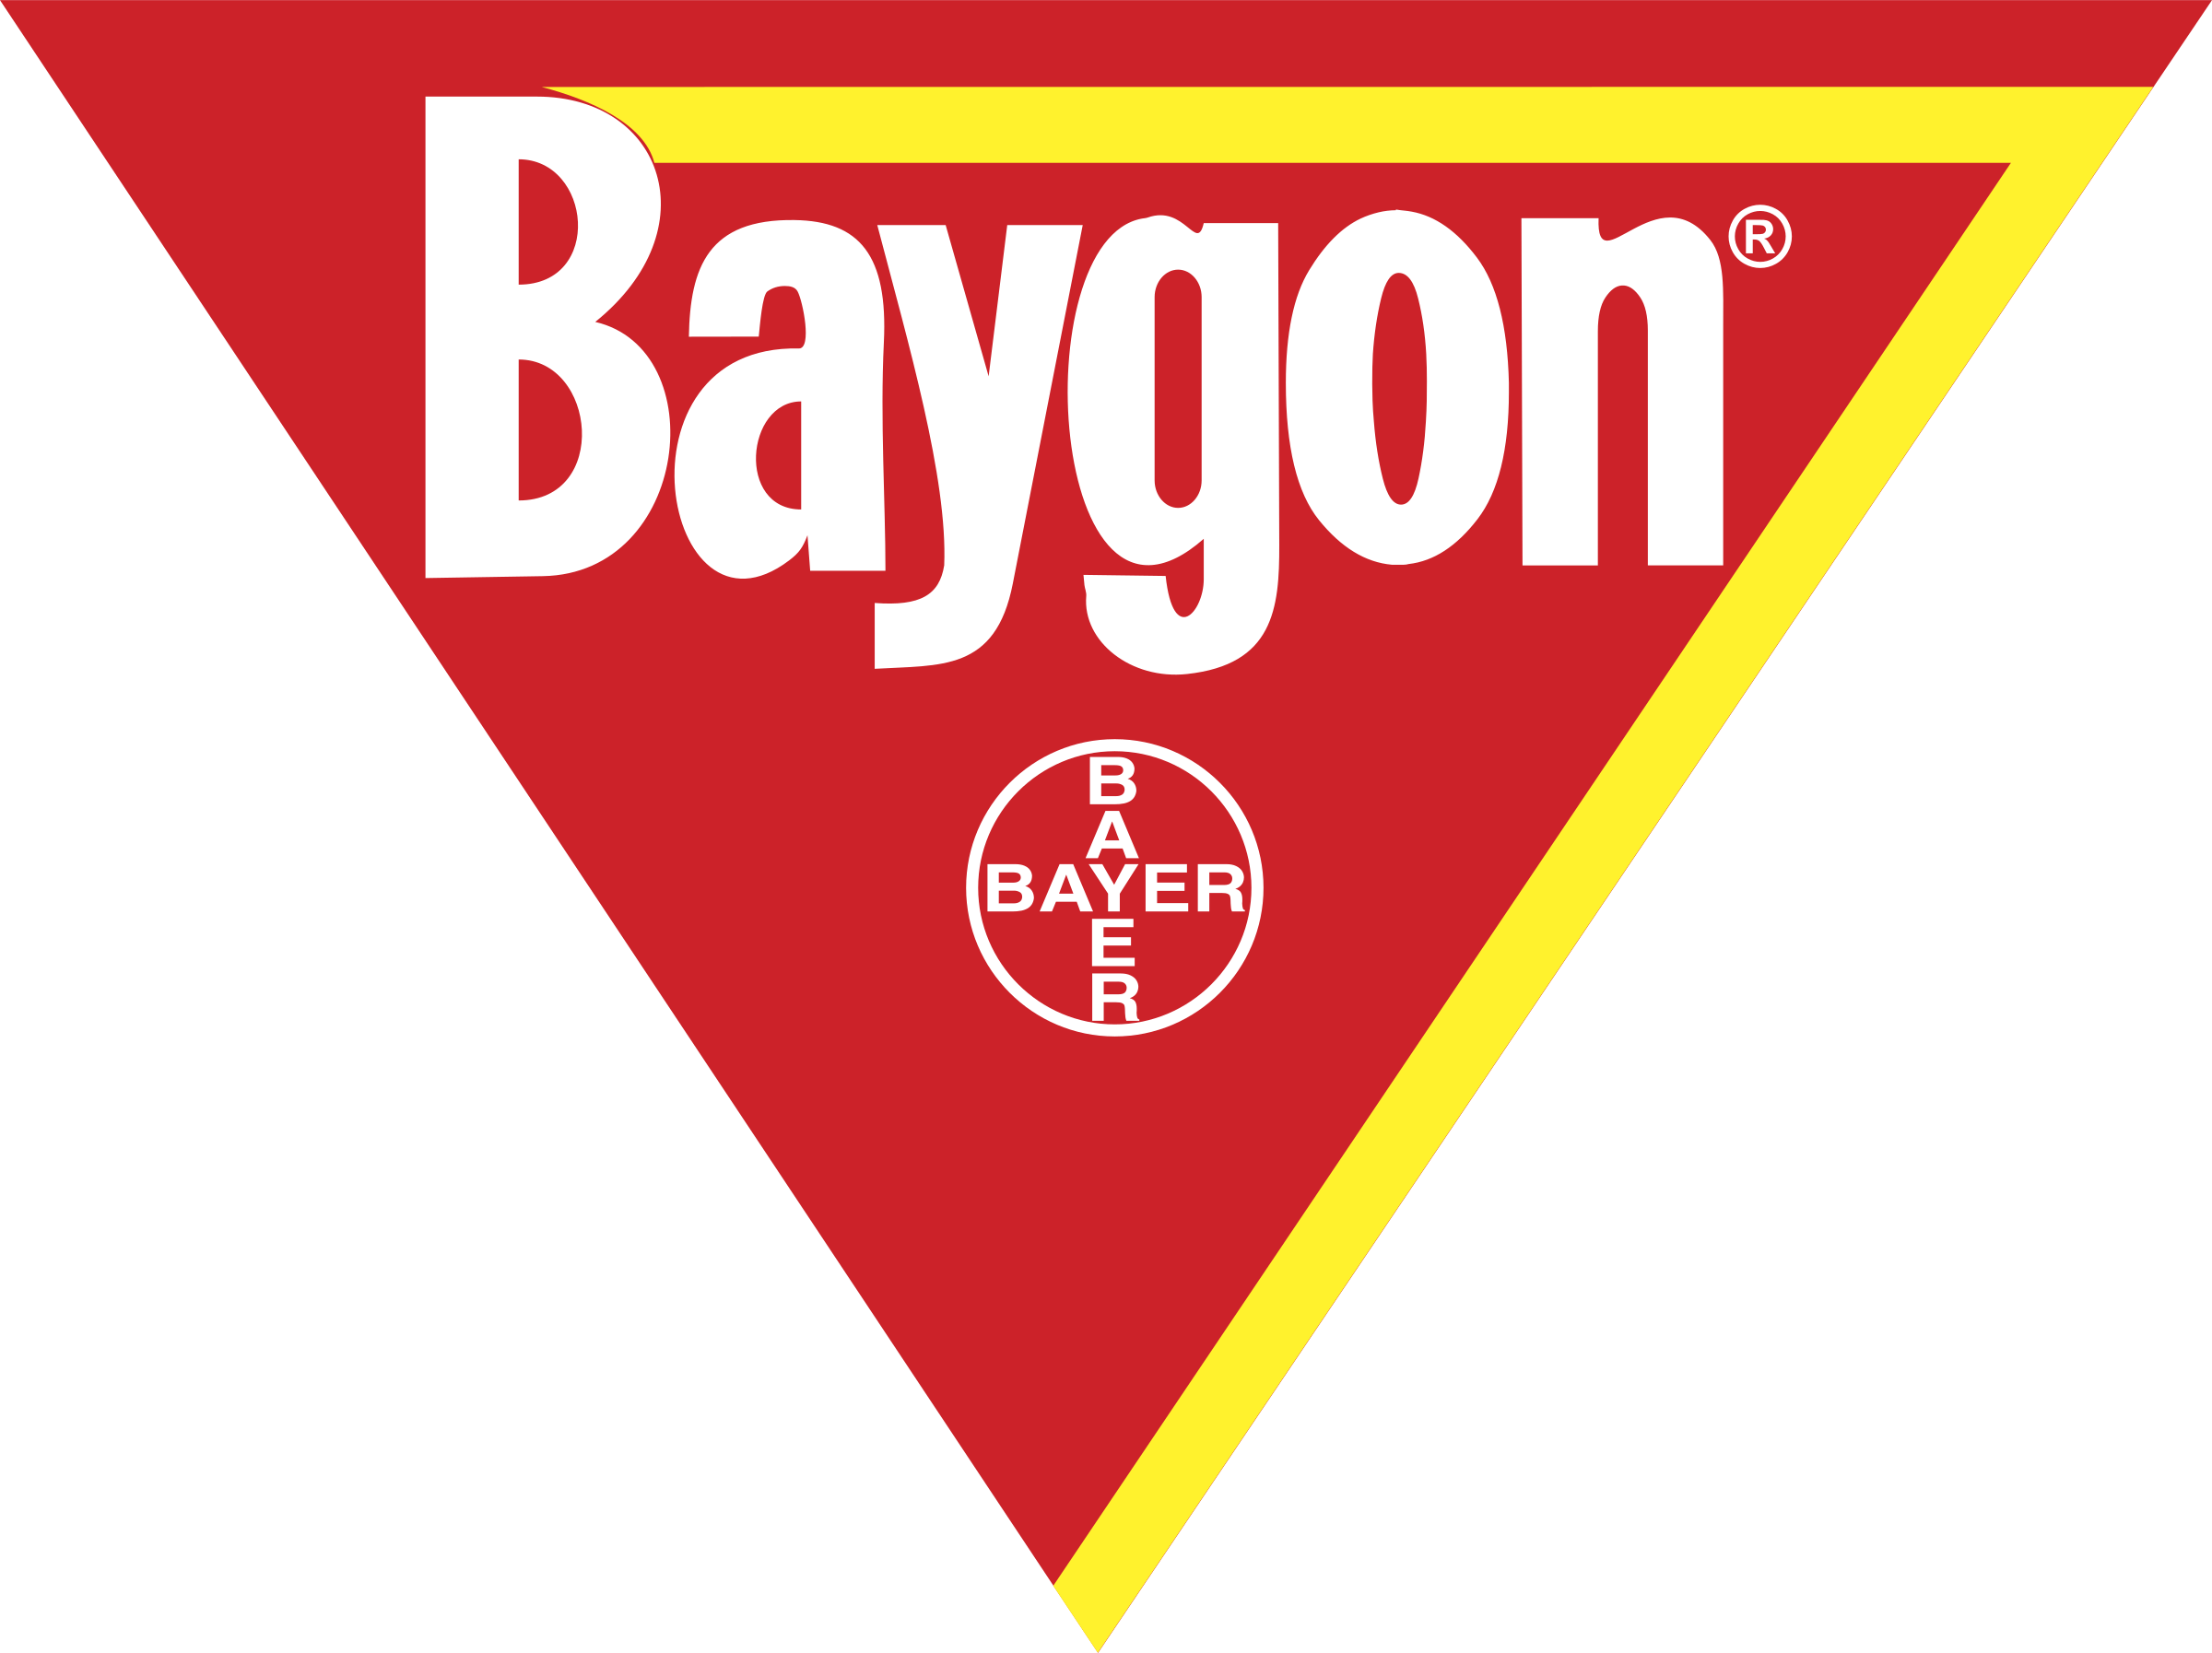 Baygon Logo - Baygon Logo PNG Transparent & SVG Vector - Freebie Supply